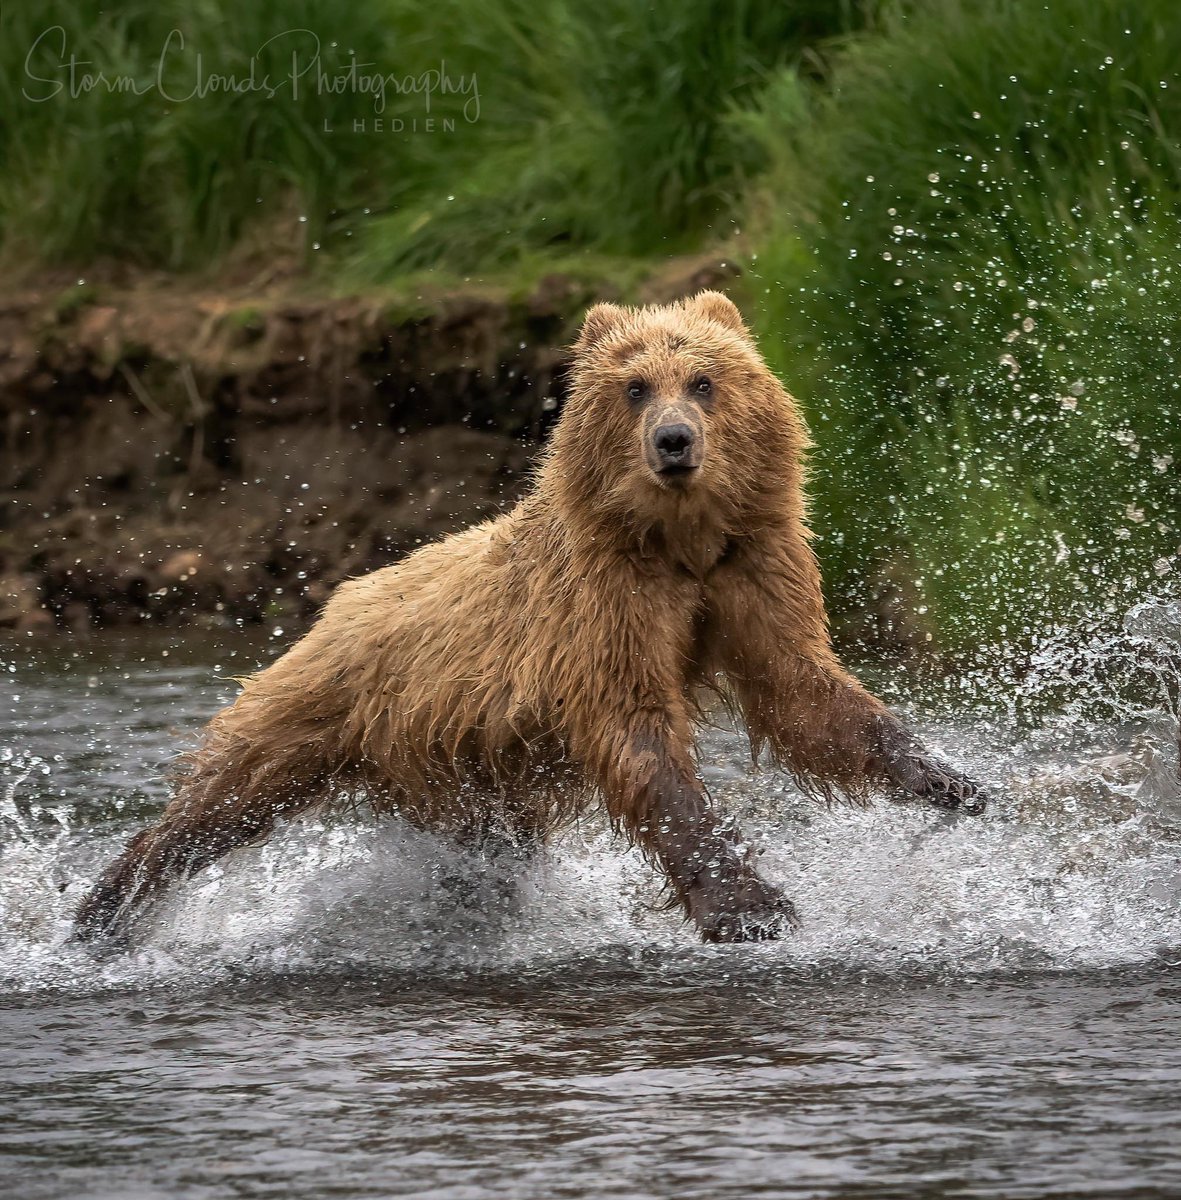 #Alaska #brownbear #cub 🐻running from bears at #brooksfalls #katmai  in July. 😎#visitAlaska #bear #wildlifephotography #thephotohour #grizzly #nikonUSA #natgeoyourshot #zcreators #natwildmag #wildlifepic #natgeowild #nikonoutdoors #nationalparkwonders @nationalparkservice